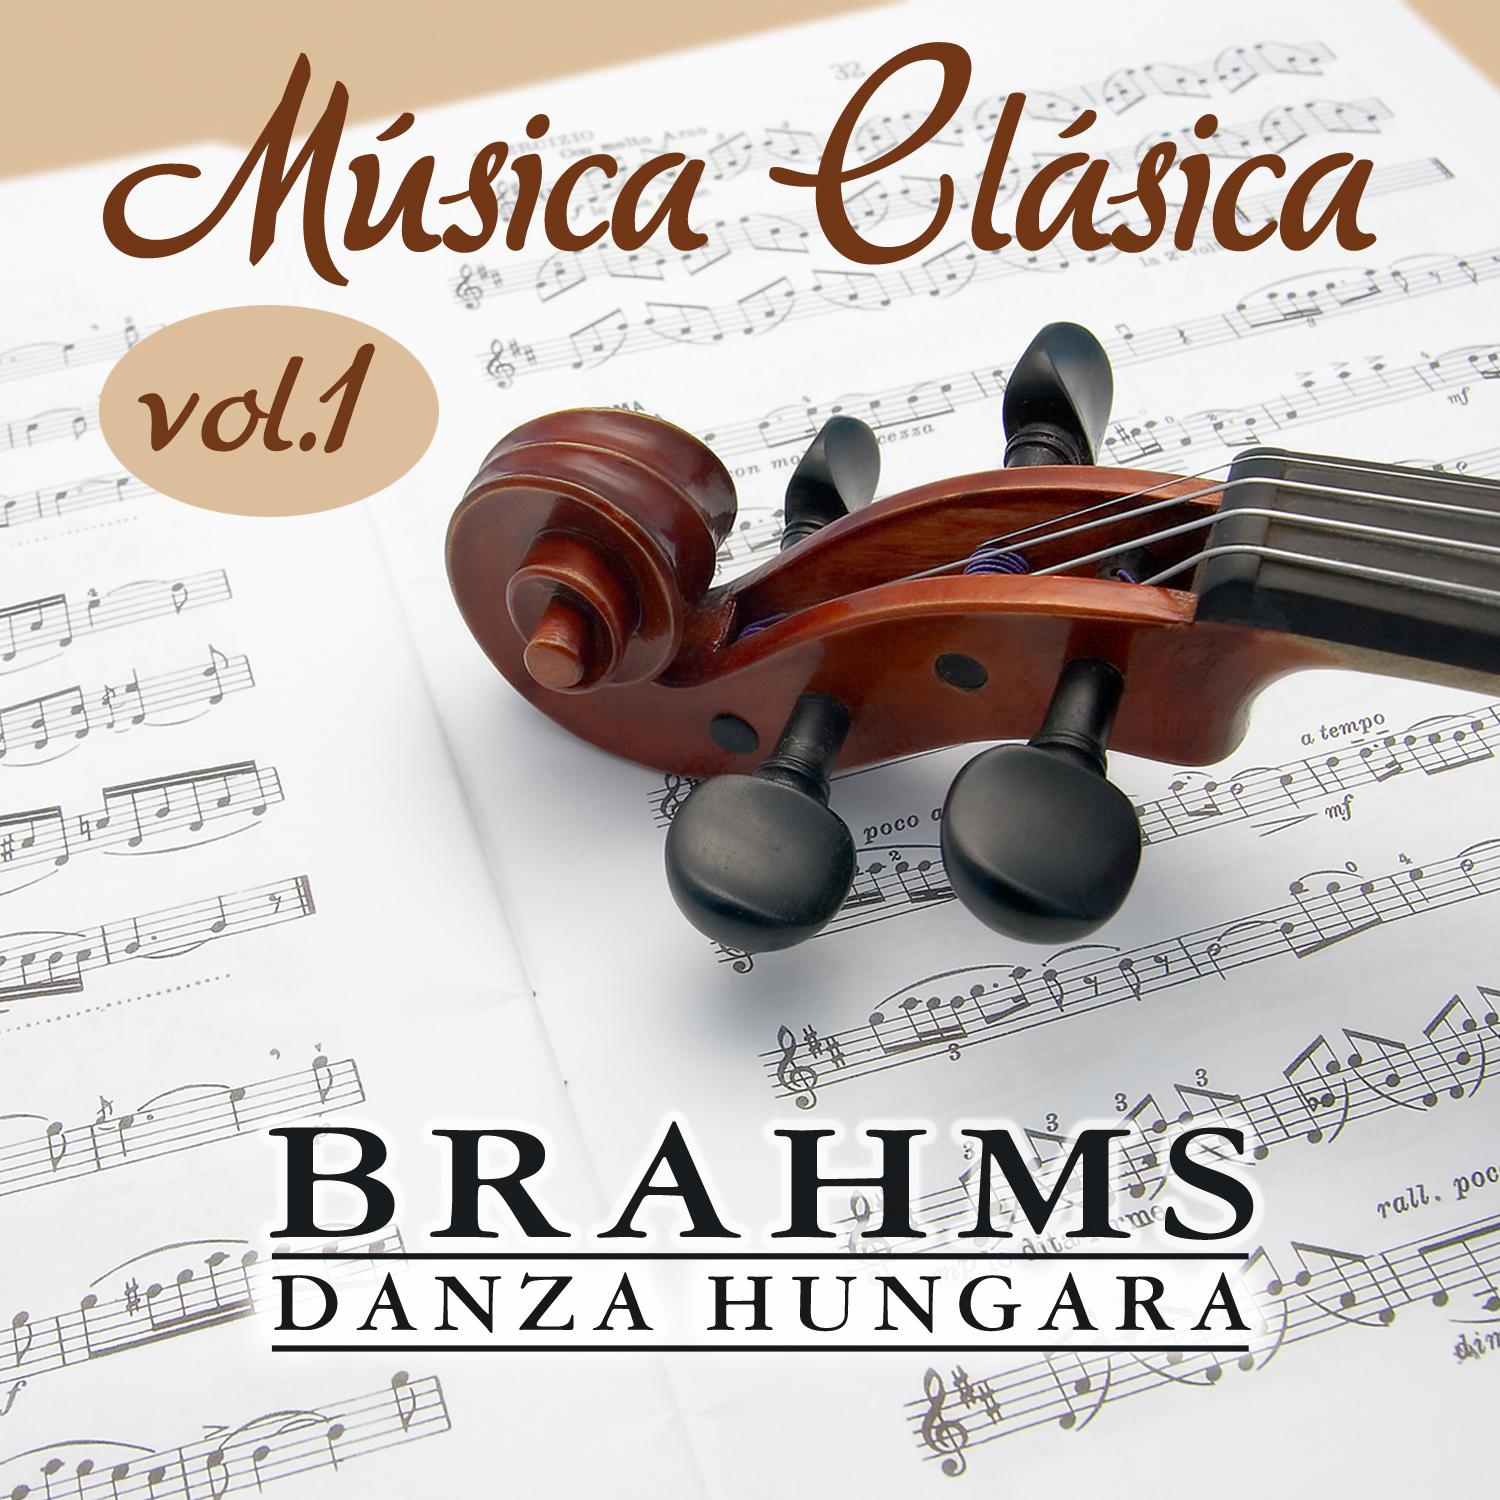 Brahms Musica Clasica Vol. 1